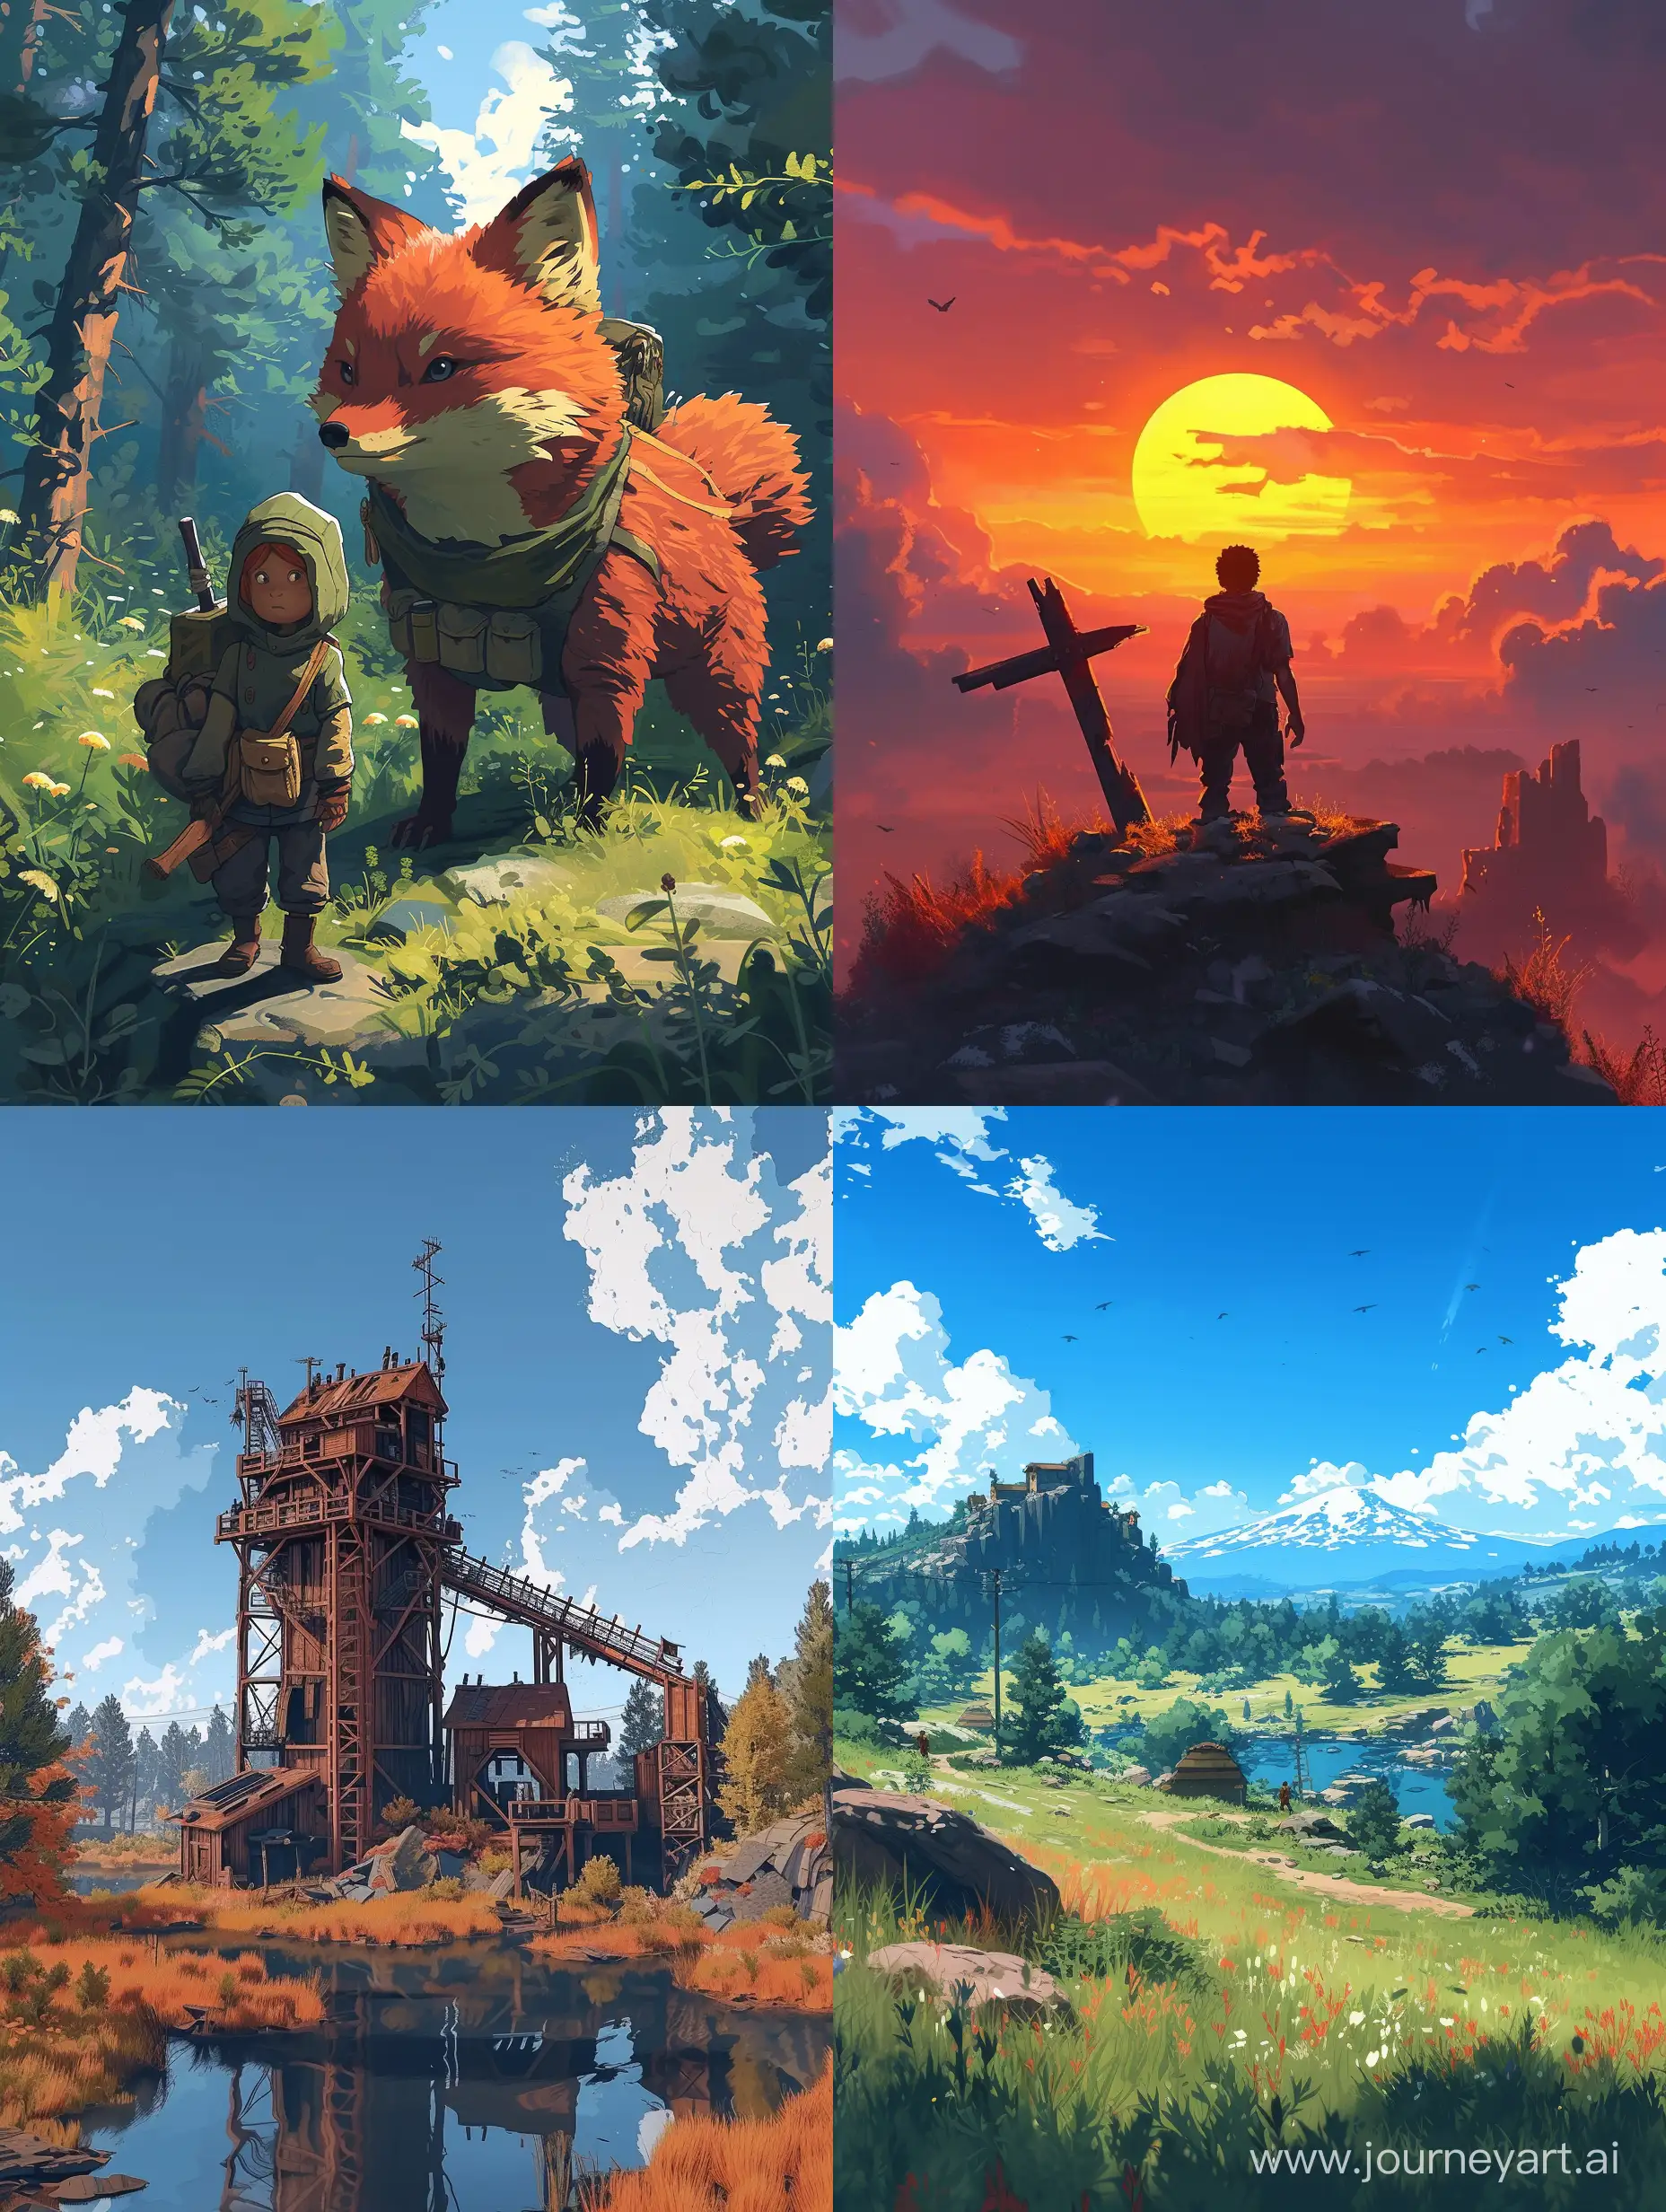 Rust-Videogame-Studio-Ghibli-Inspired-Art-Exploring-Fantasy-Worlds